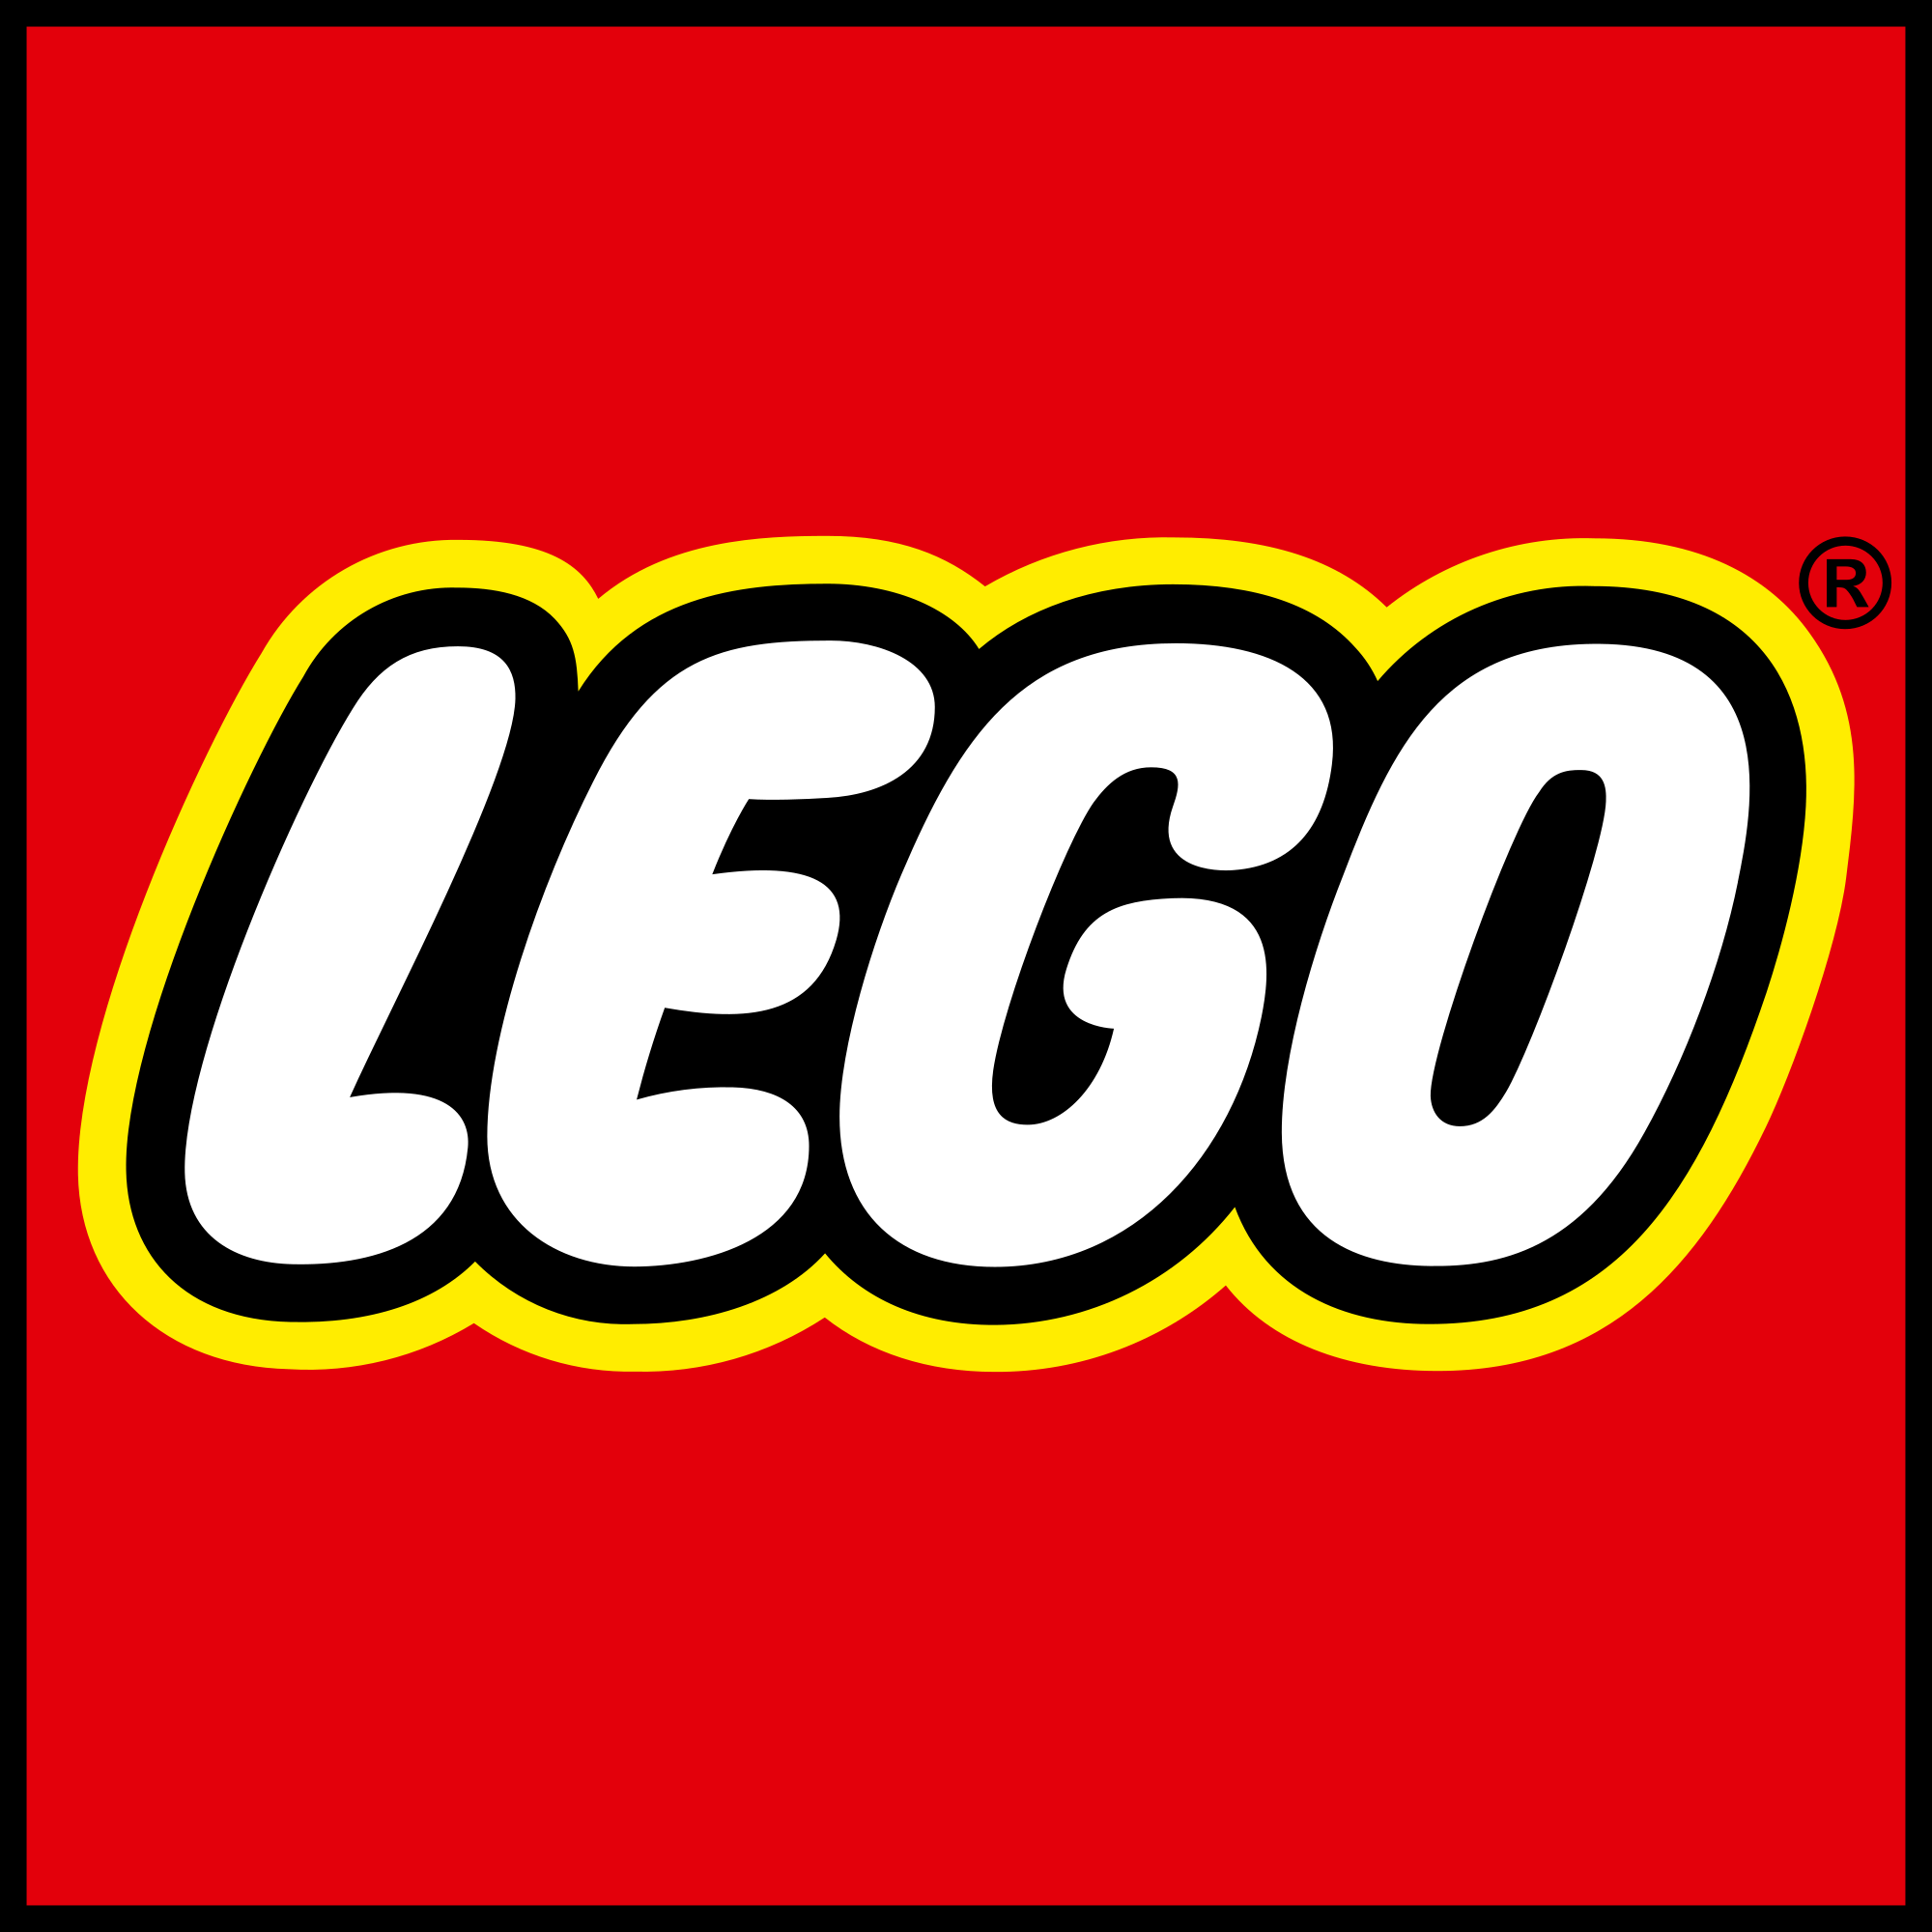 Printable LEGO Logo - File:LEGO logo.svg - Wikimedia Commons